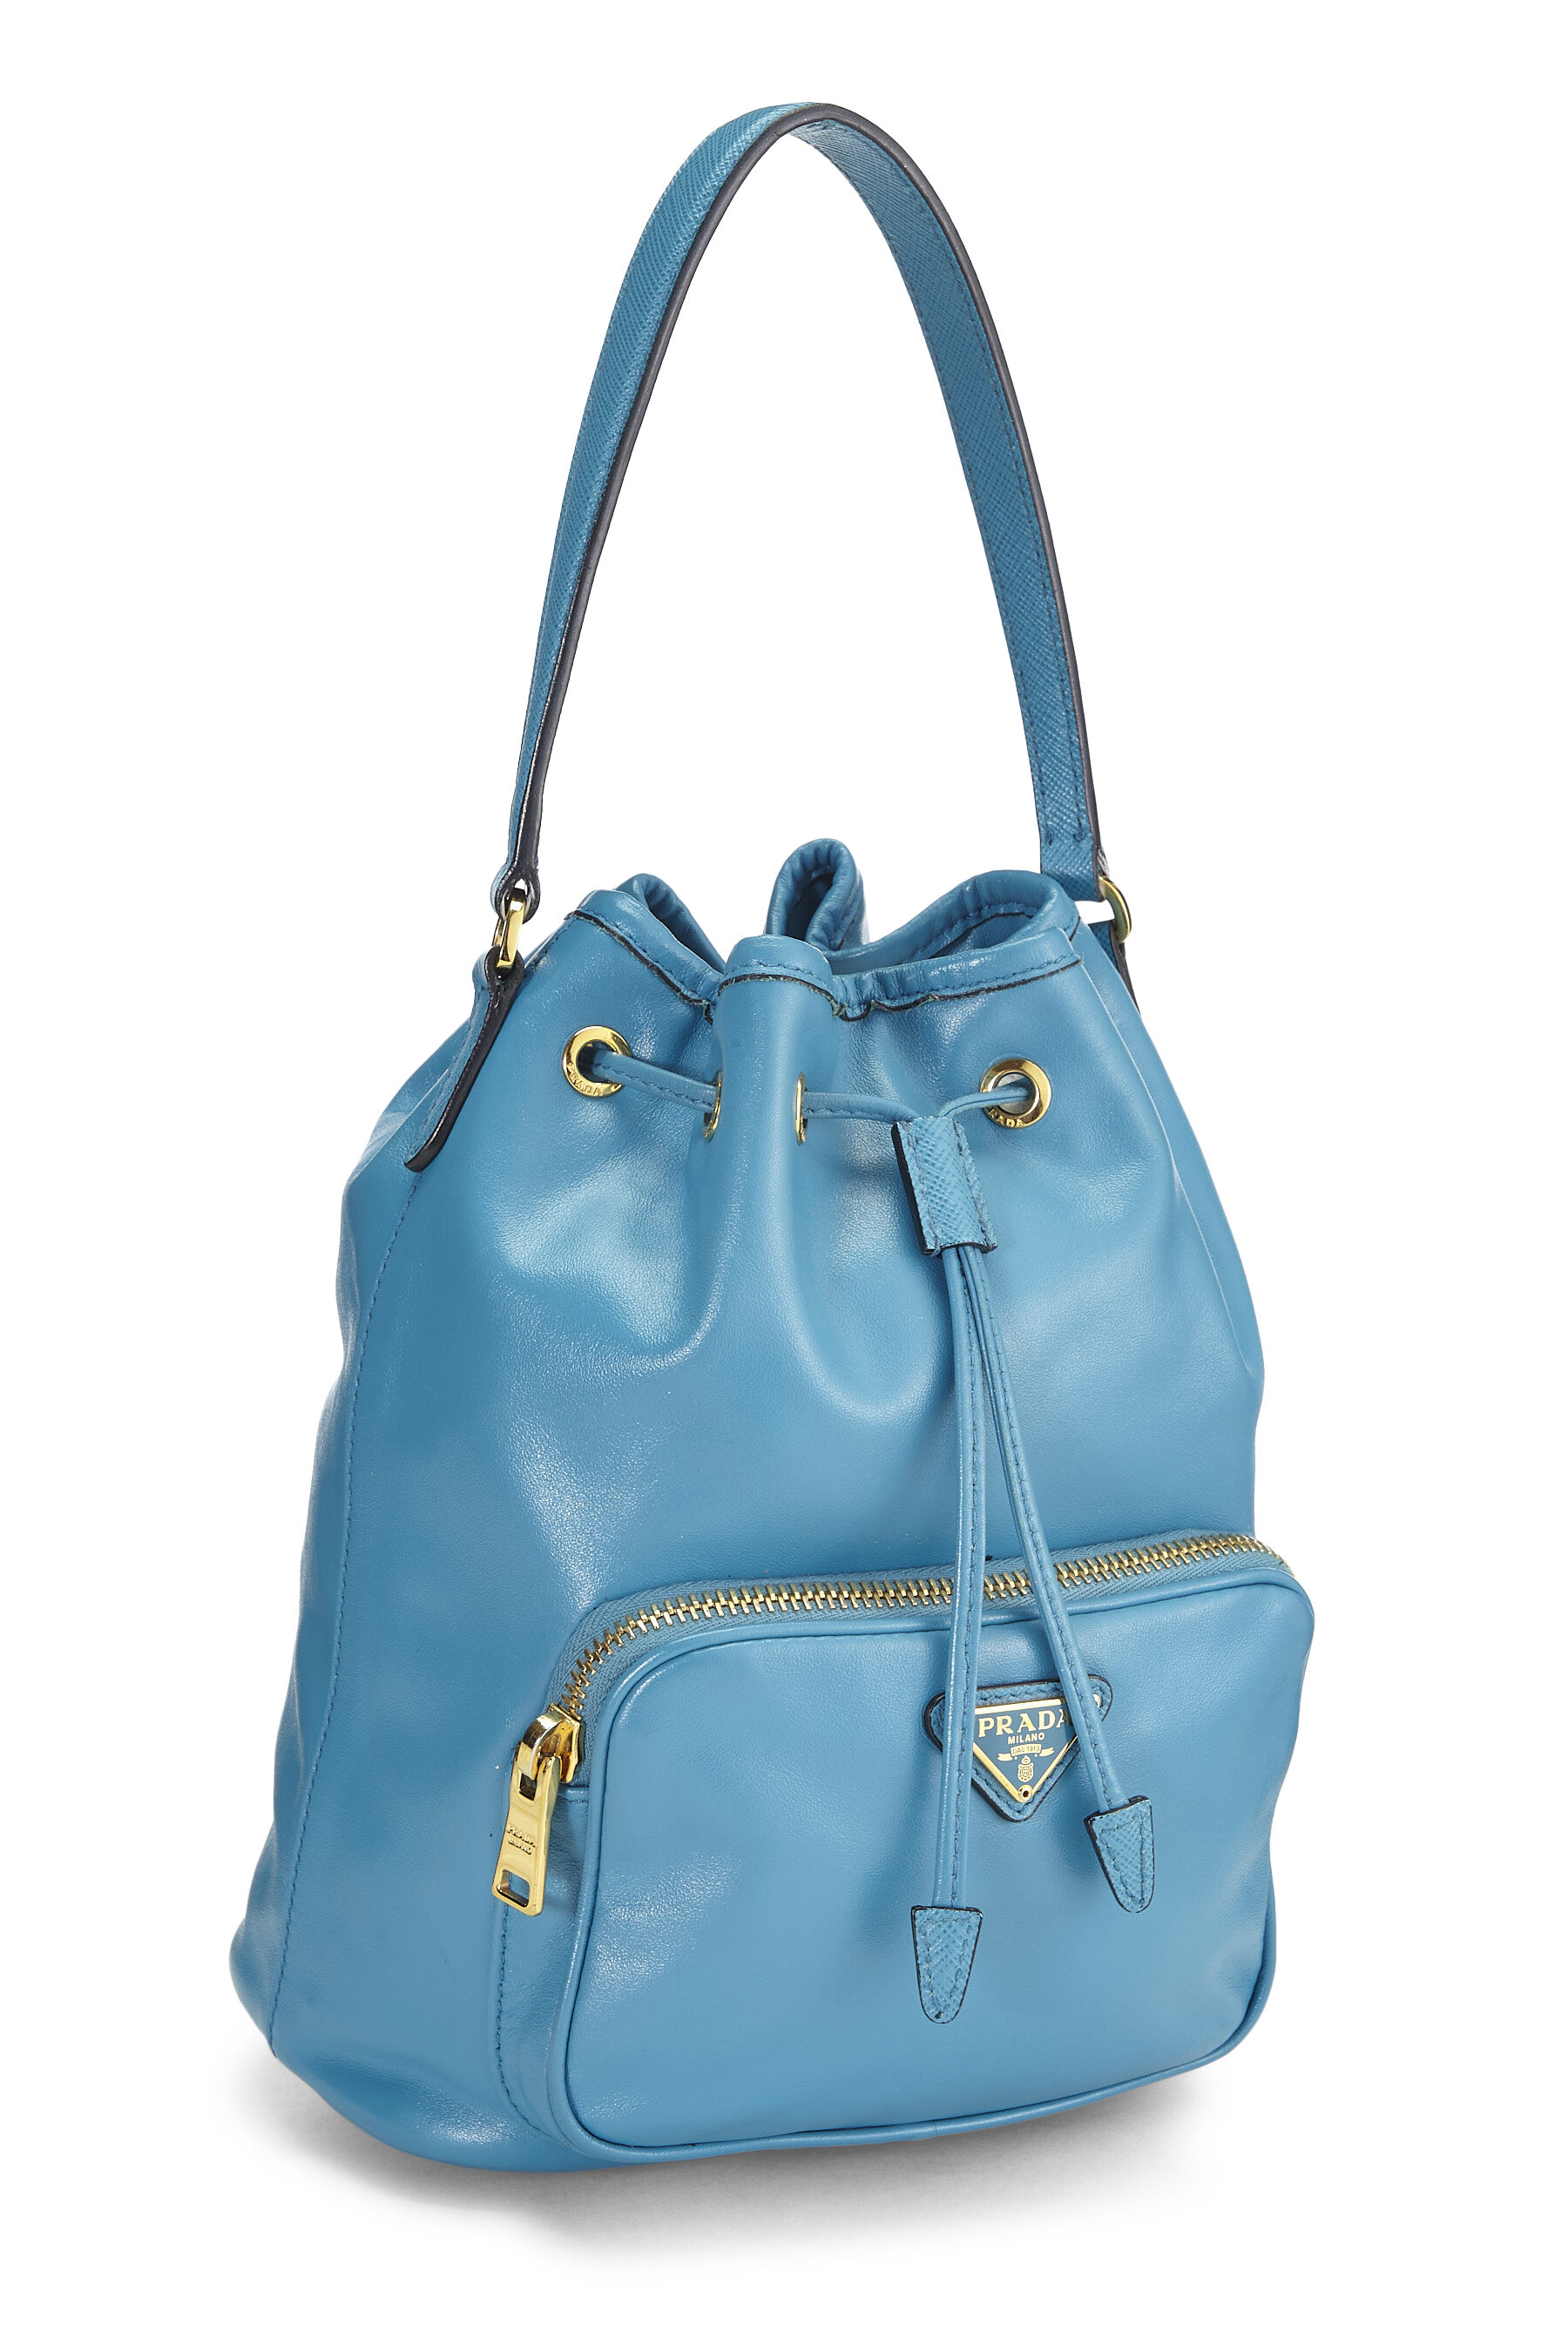 Prada - Blue Calfskin Diagramme Duet Shoulder Bag